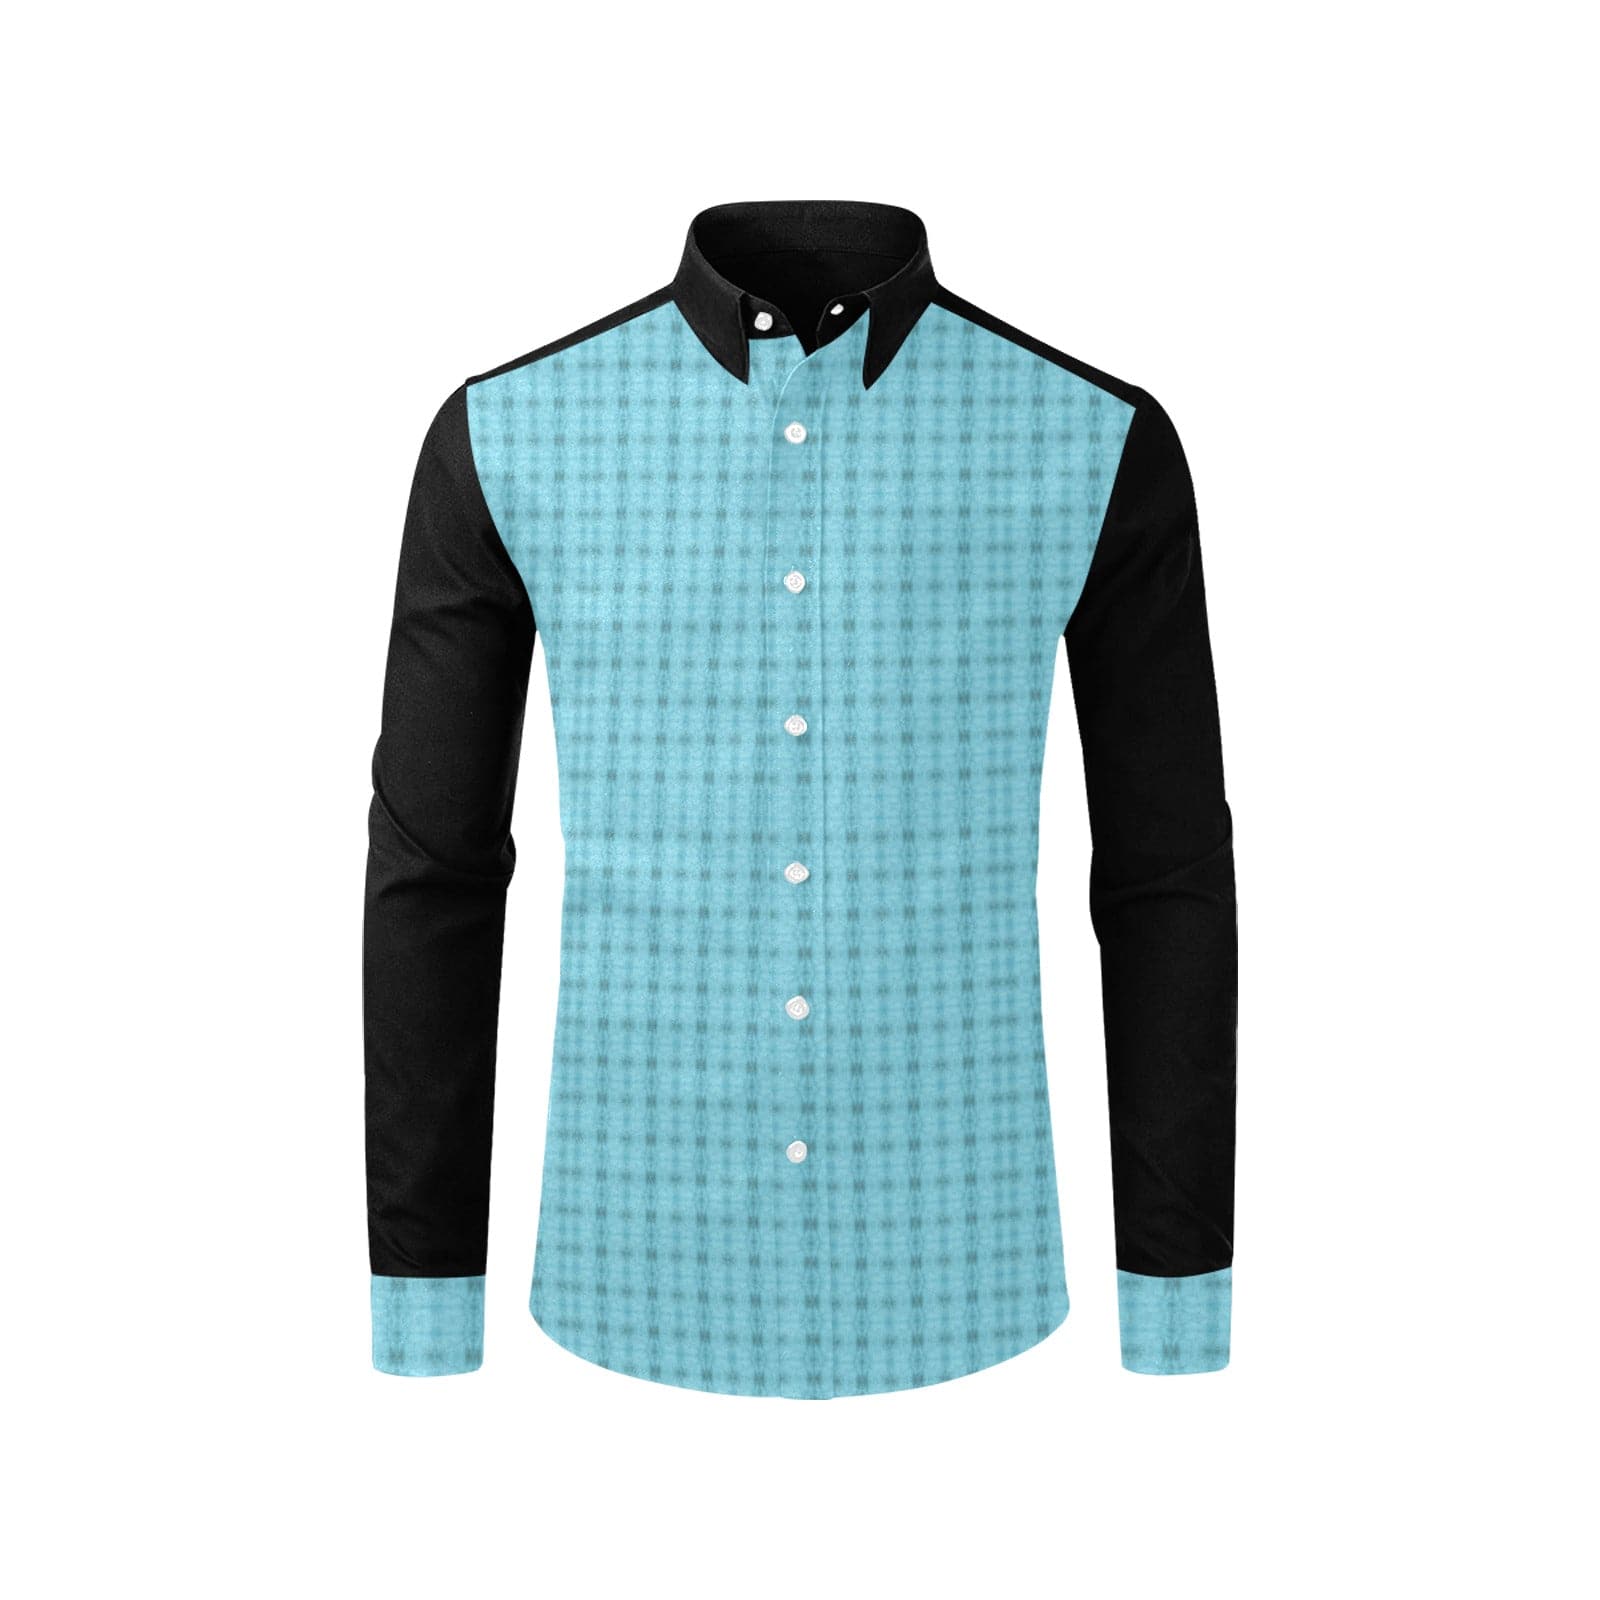 Black and Light Blue Line Patterned Easy Fit Longsleeve Shirt for Men Long Sleeve Shirt (Without Pocket)